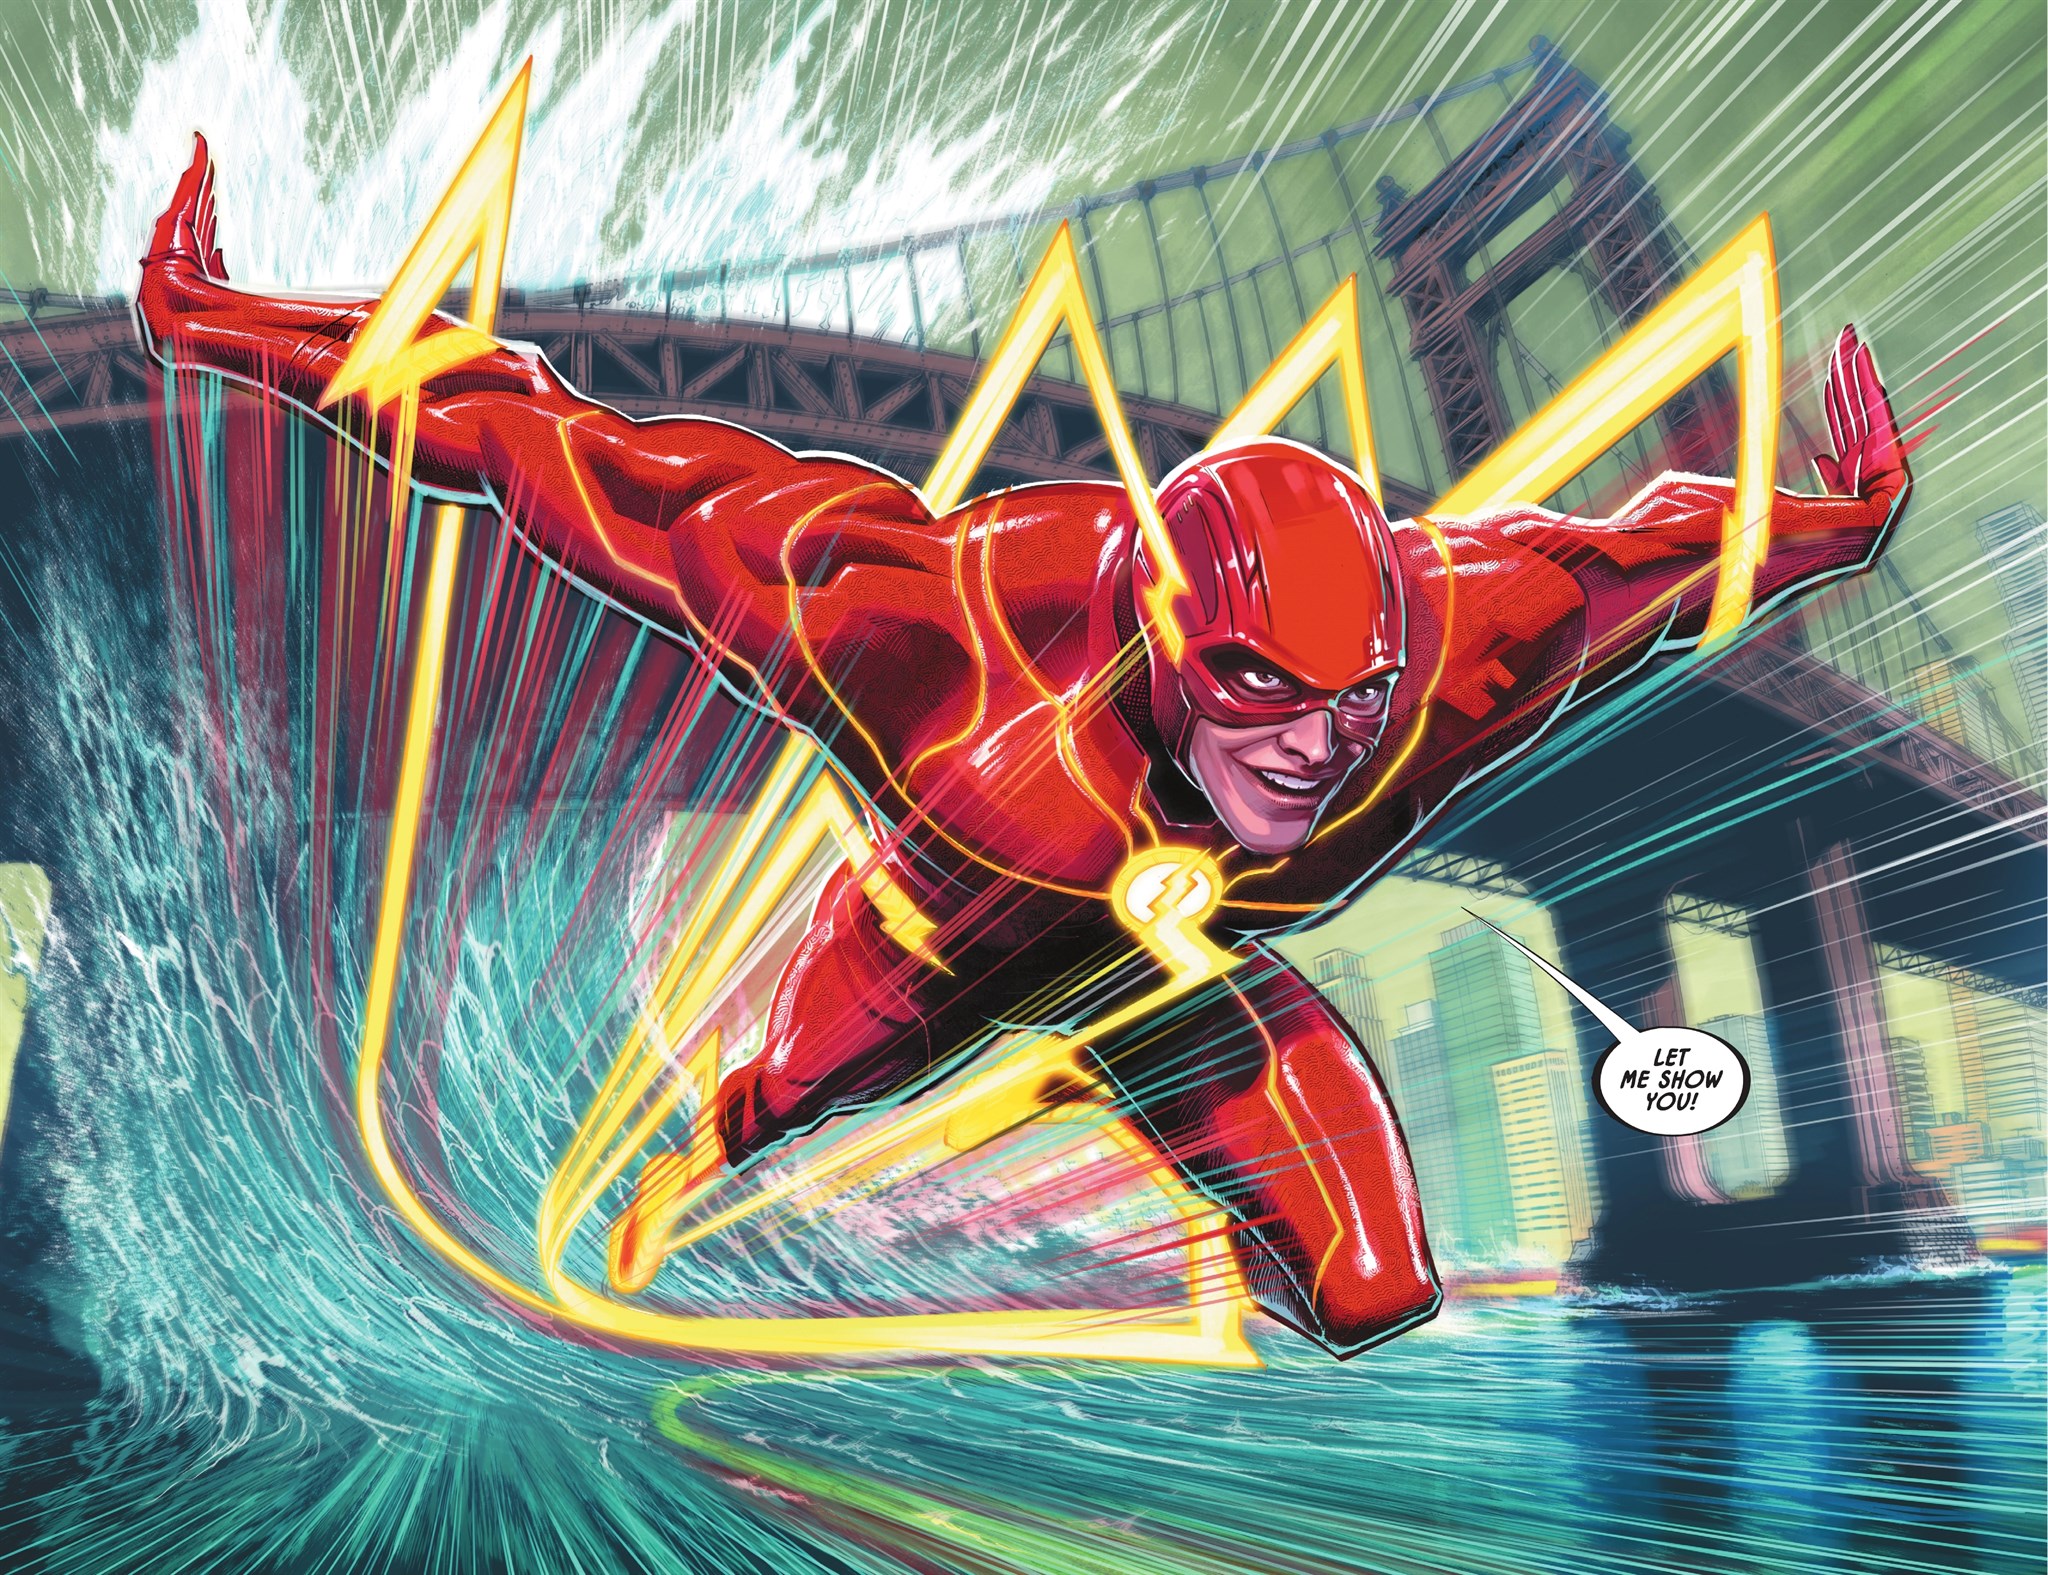 General 2048x1575 DC Comics comic art comic character comics Zack Snyder's Justice League The Flash (TV Series) The Flash Barry Allen bodysuit superhero water bridge digital art